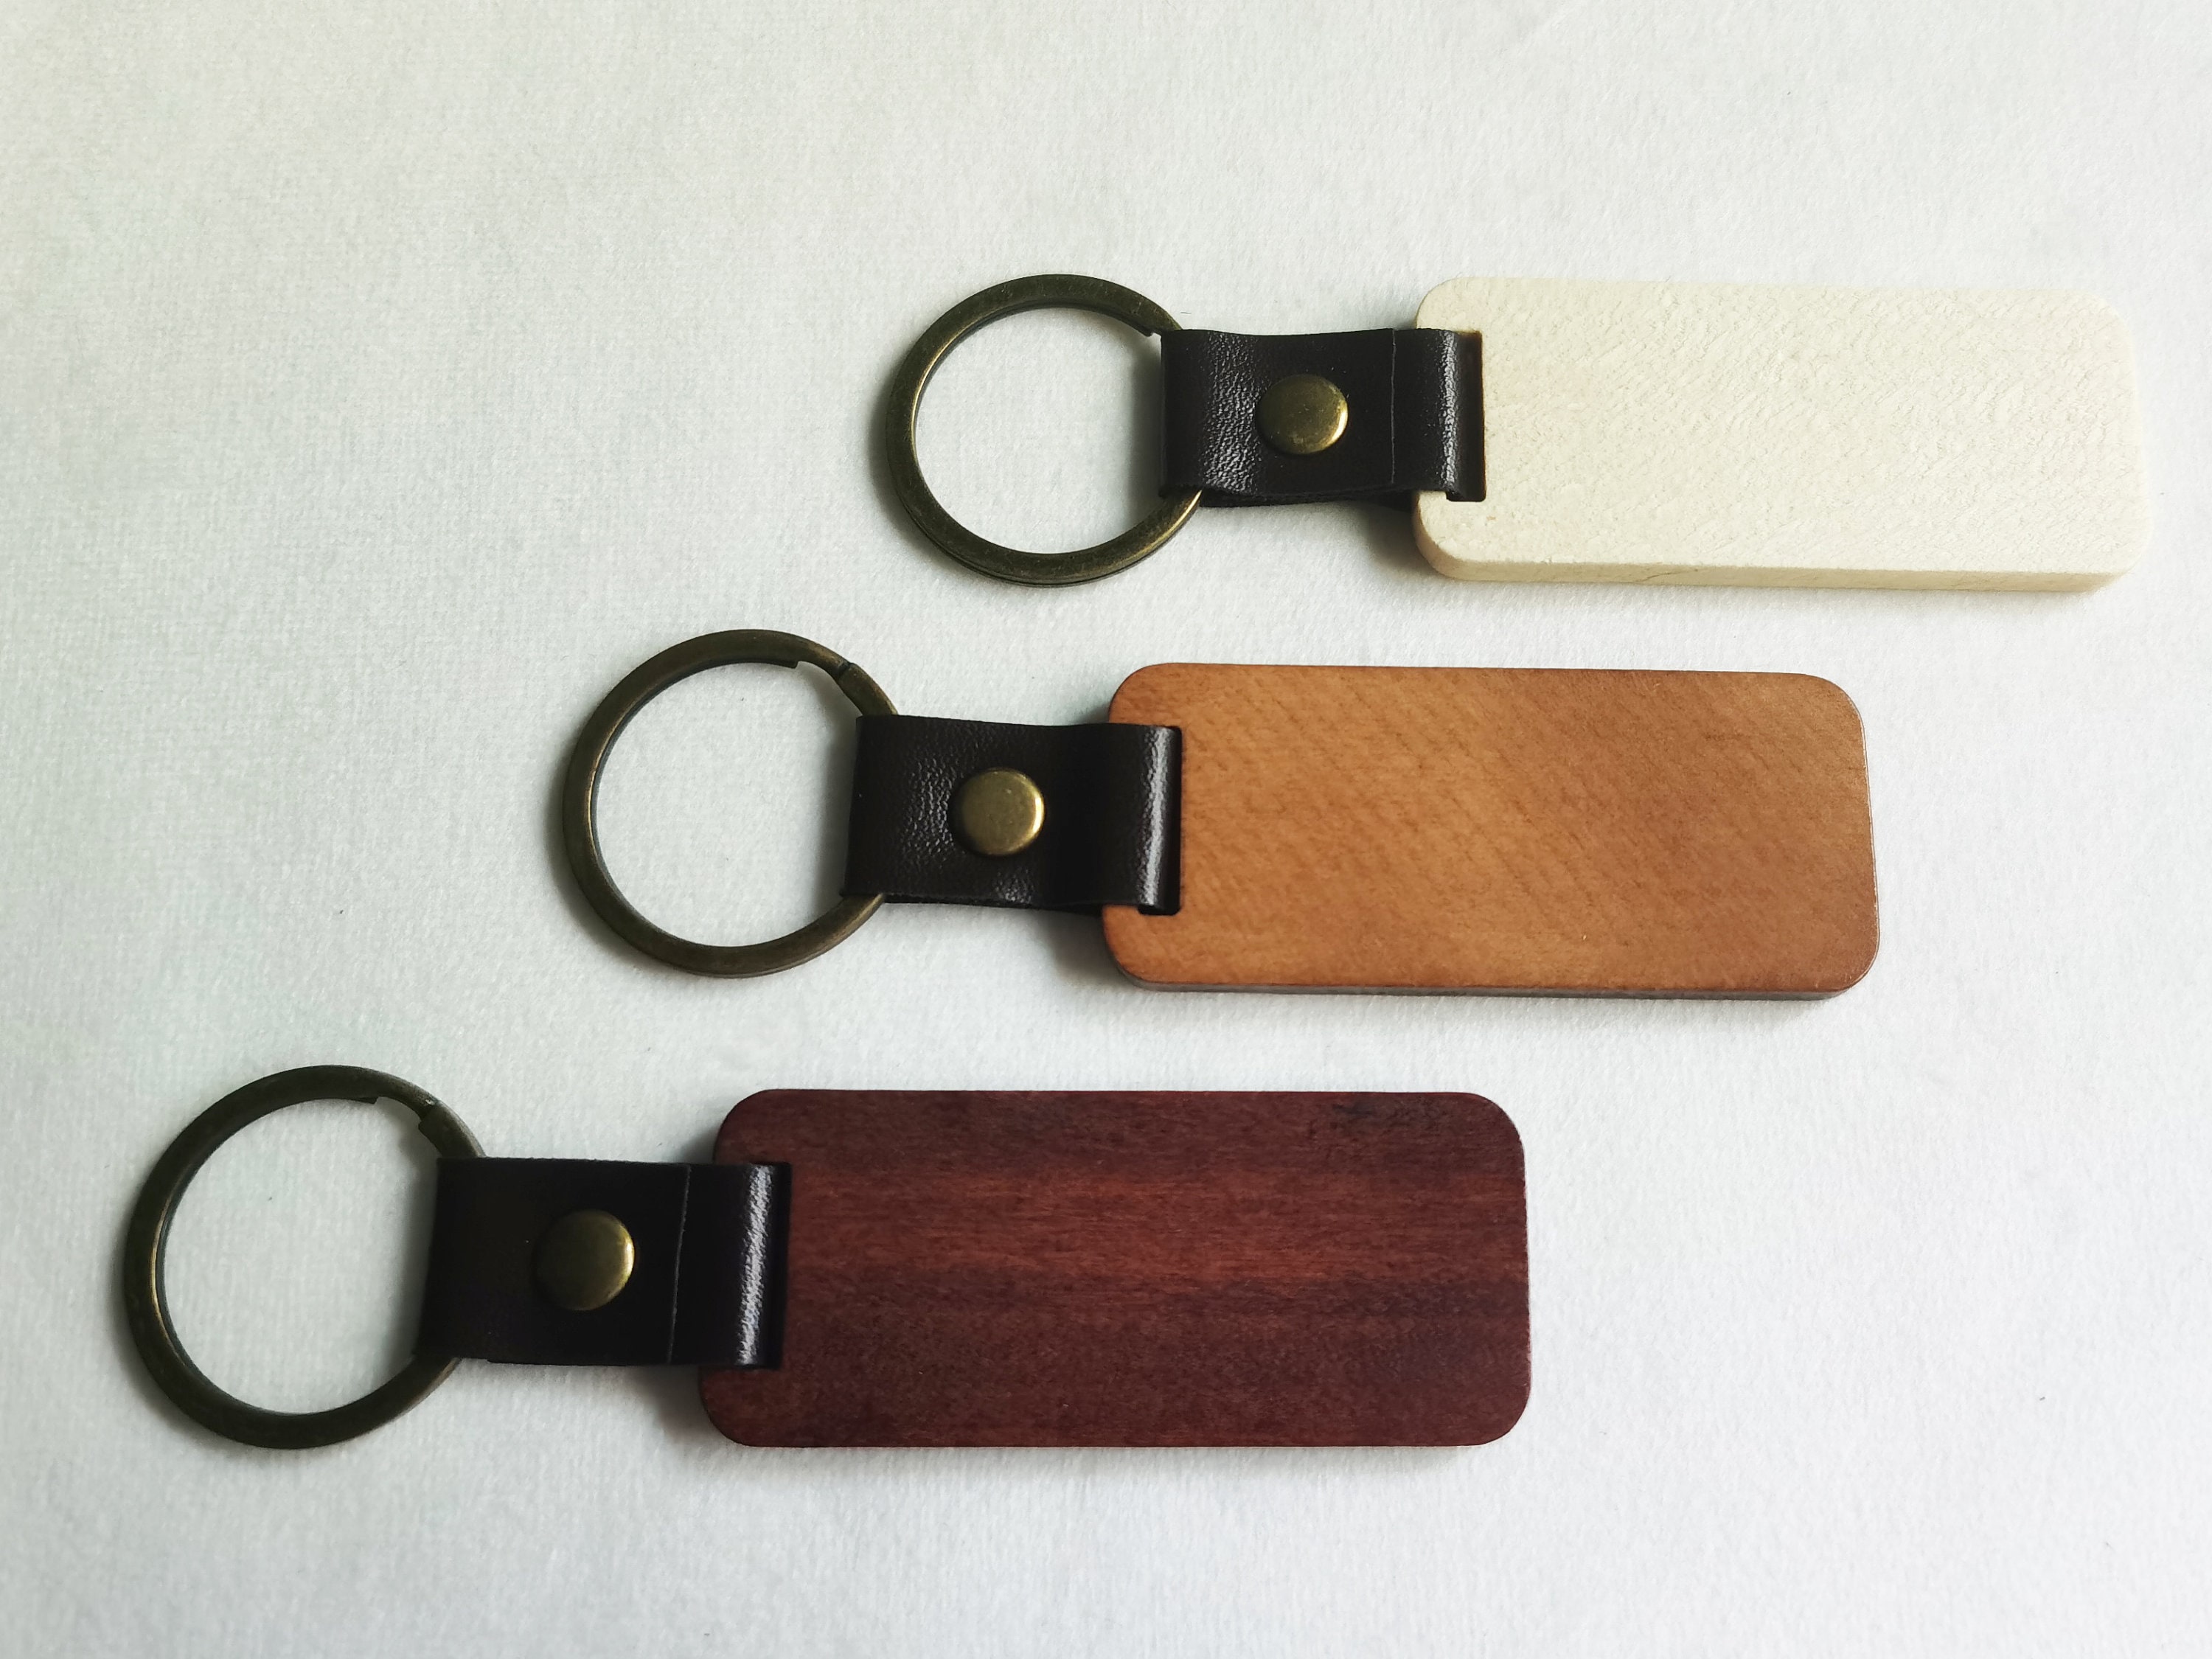 Homemaxs 6pcs Wood Keychain Blank Wood Keychain Blanks Wooden Key Ring Crafts Keychain Engravable Wood Pendent, Adult Unisex, Size: 4.5X3.5X0.6CM